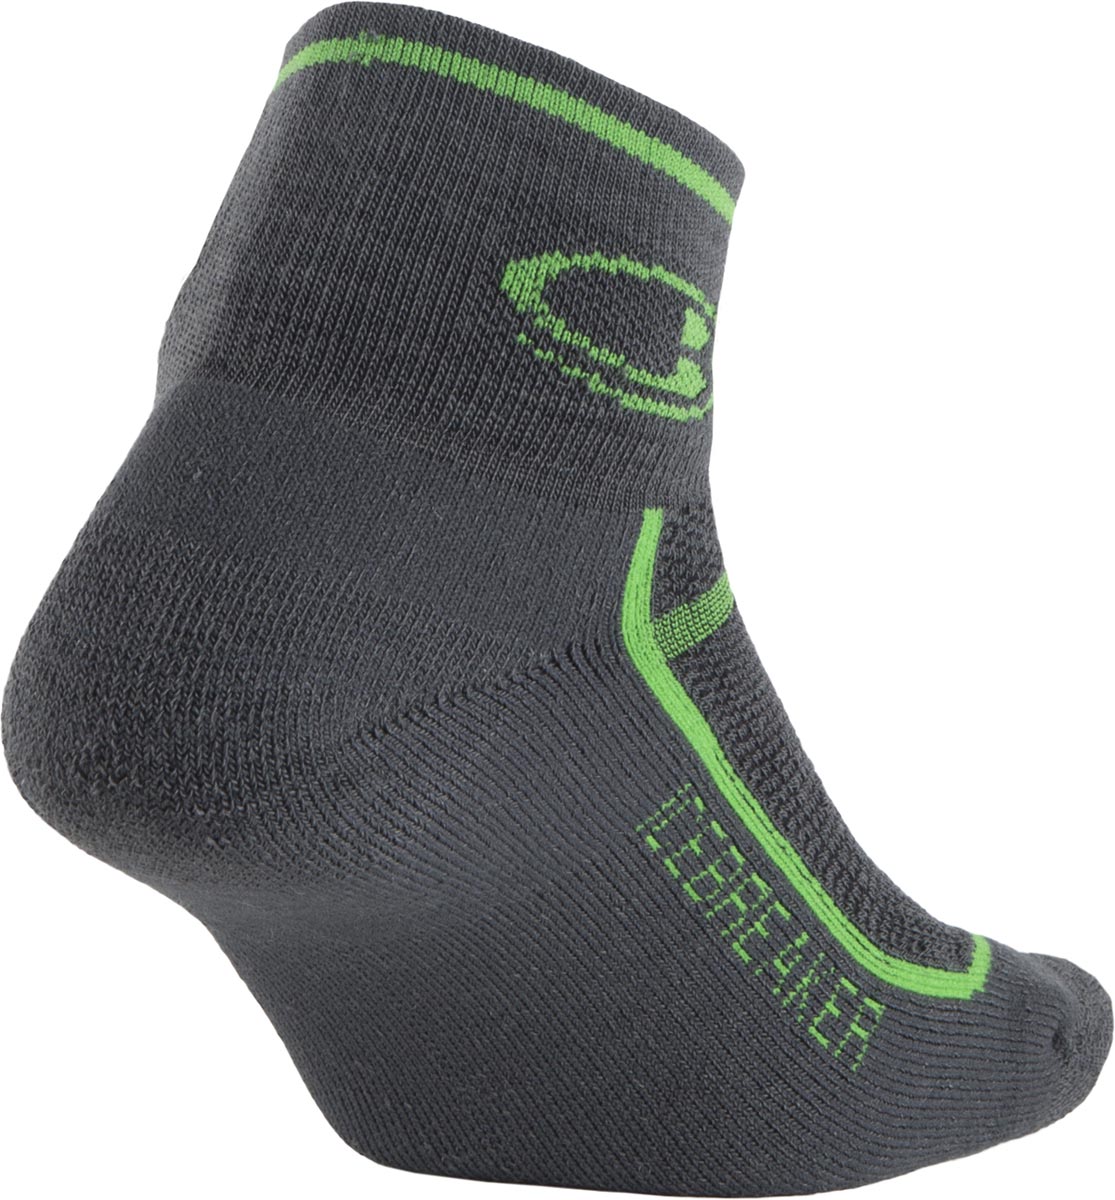 MULTISPORT CUSHION MINI - Technical socks